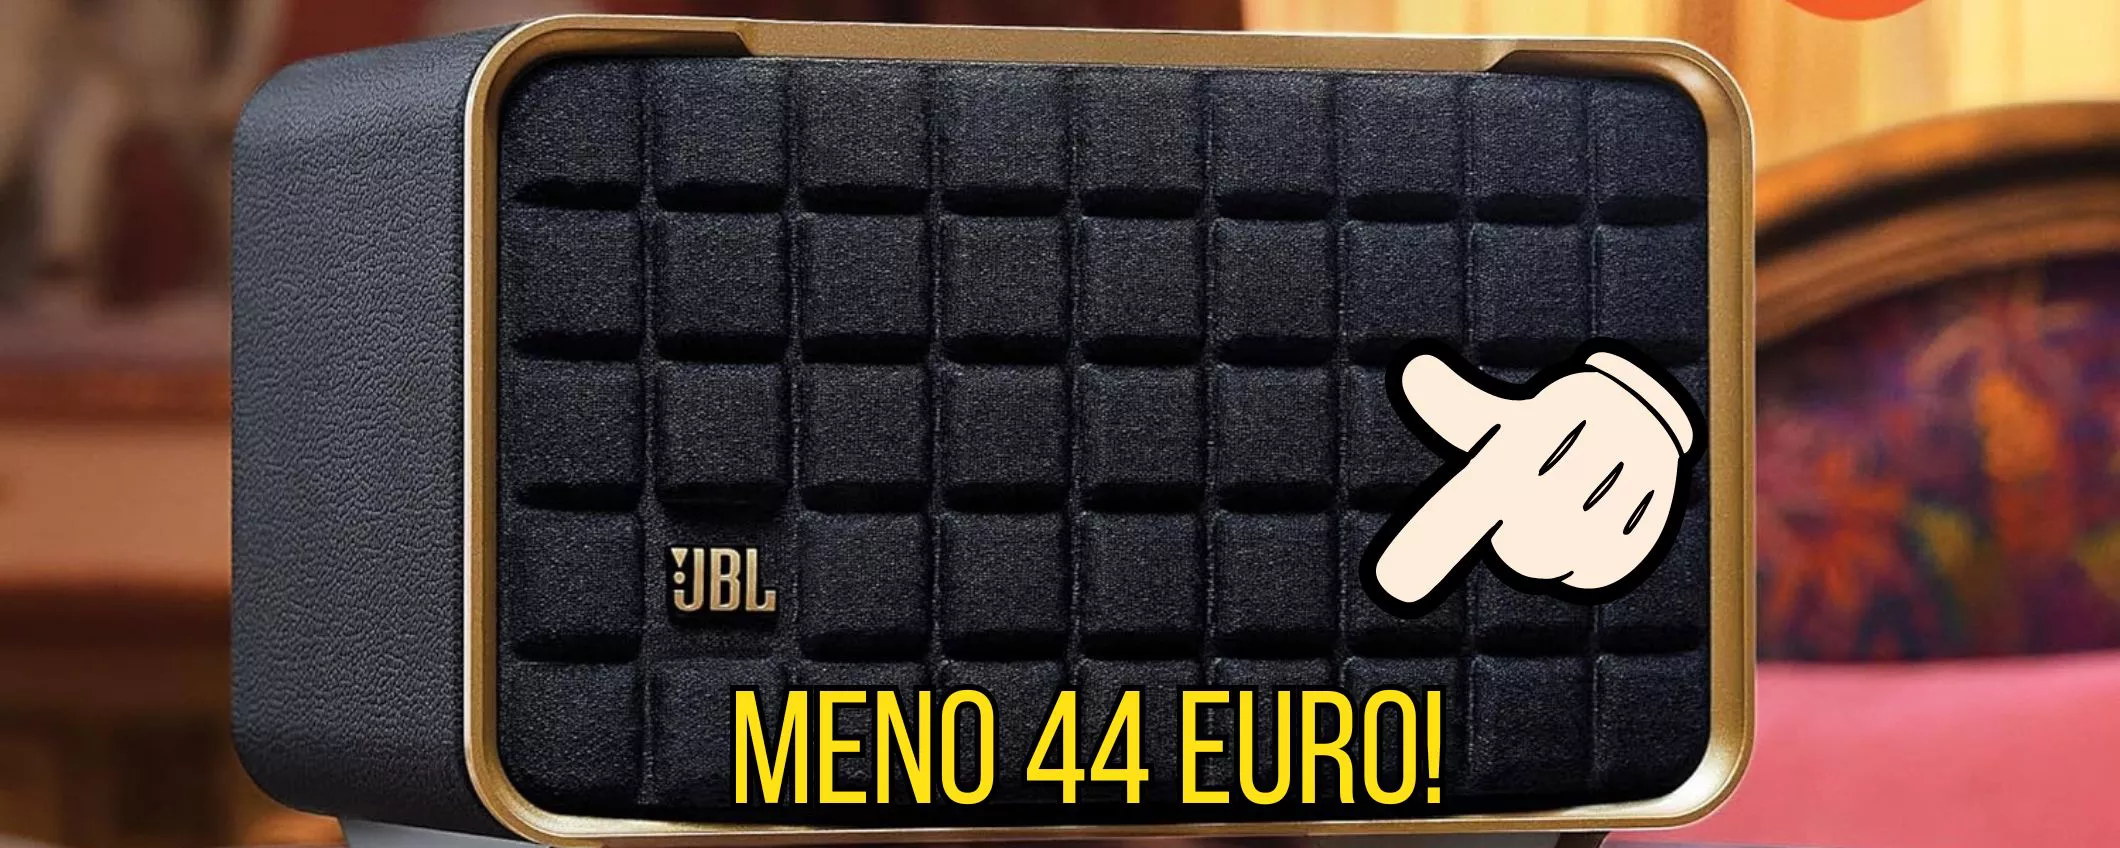 JBL Authentics 200, stile vintage e audio Premium: ottimo sconto MENO 44 euro